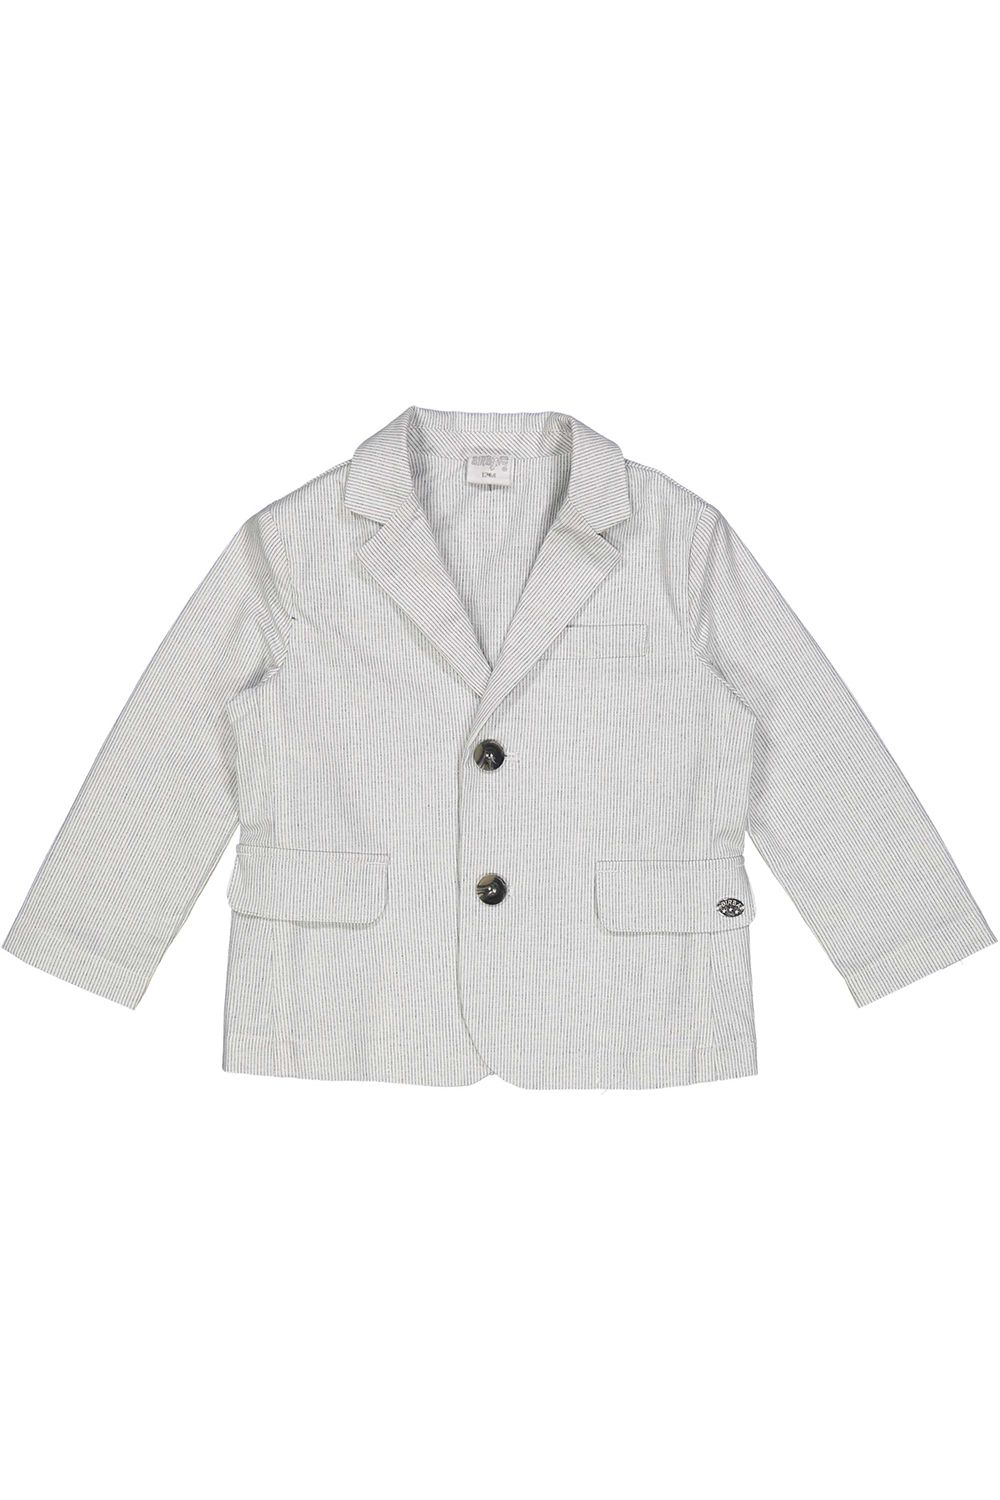 Пиджак Trybiritaly, размер 80, цвет белый